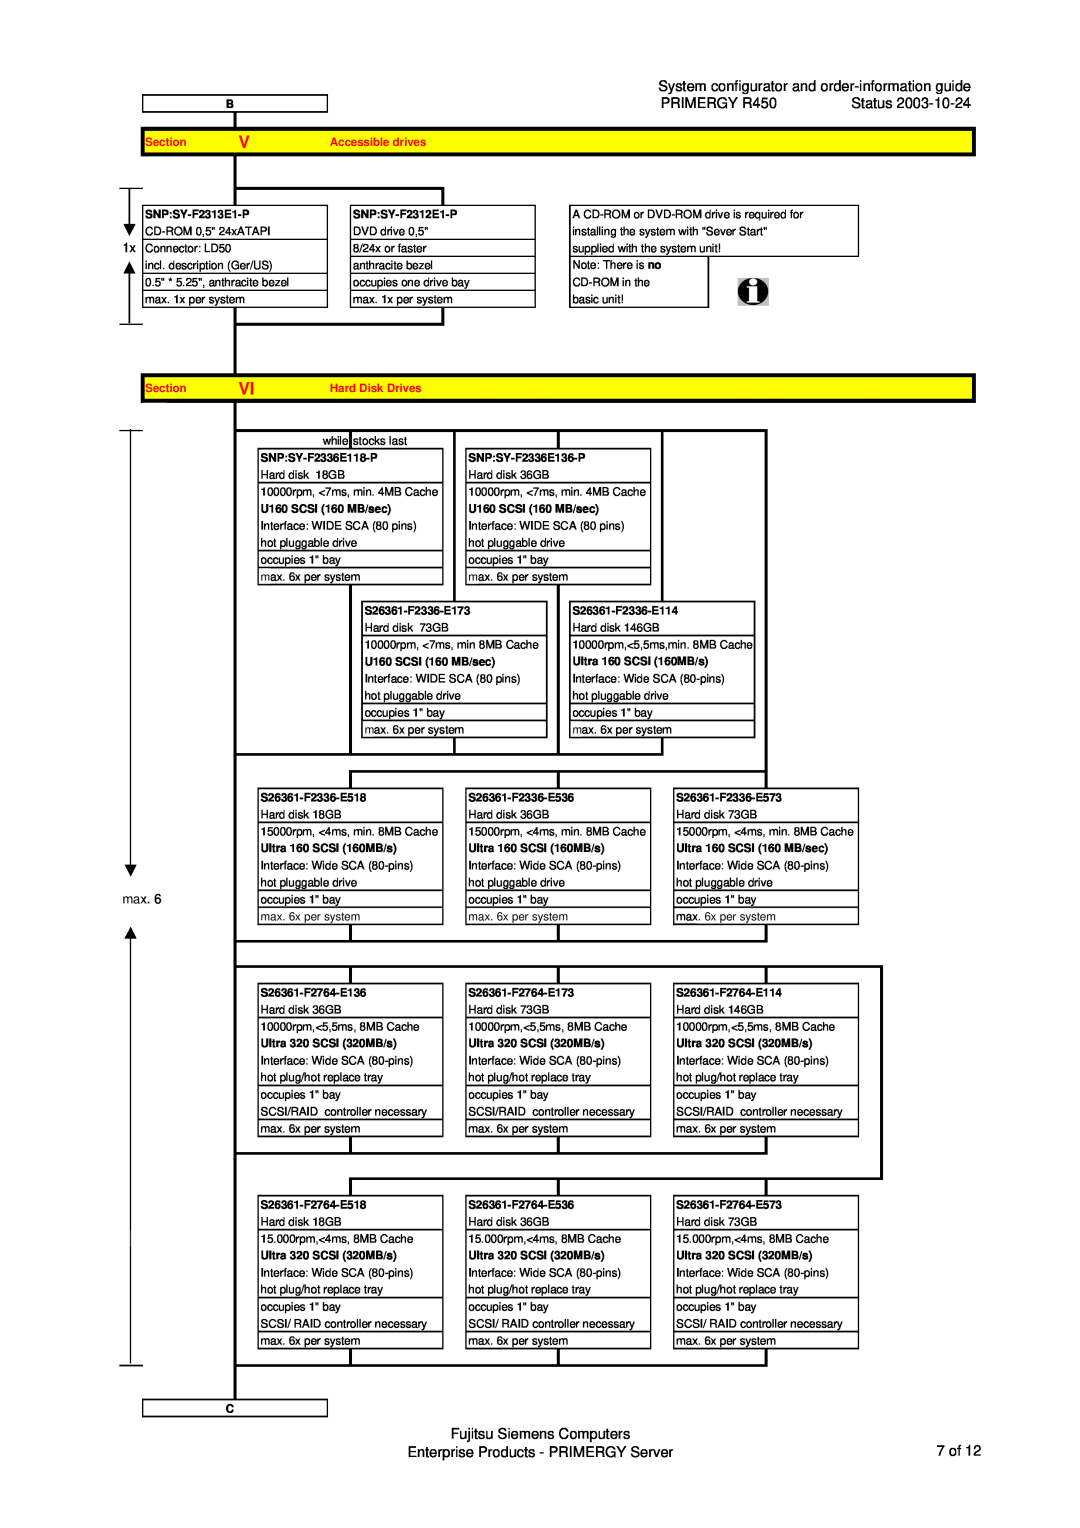 Fujitsu manual System configurator and order-information guide, PRIMERGY R450, Fujitsu Siemens Computers, Status, 7 of 